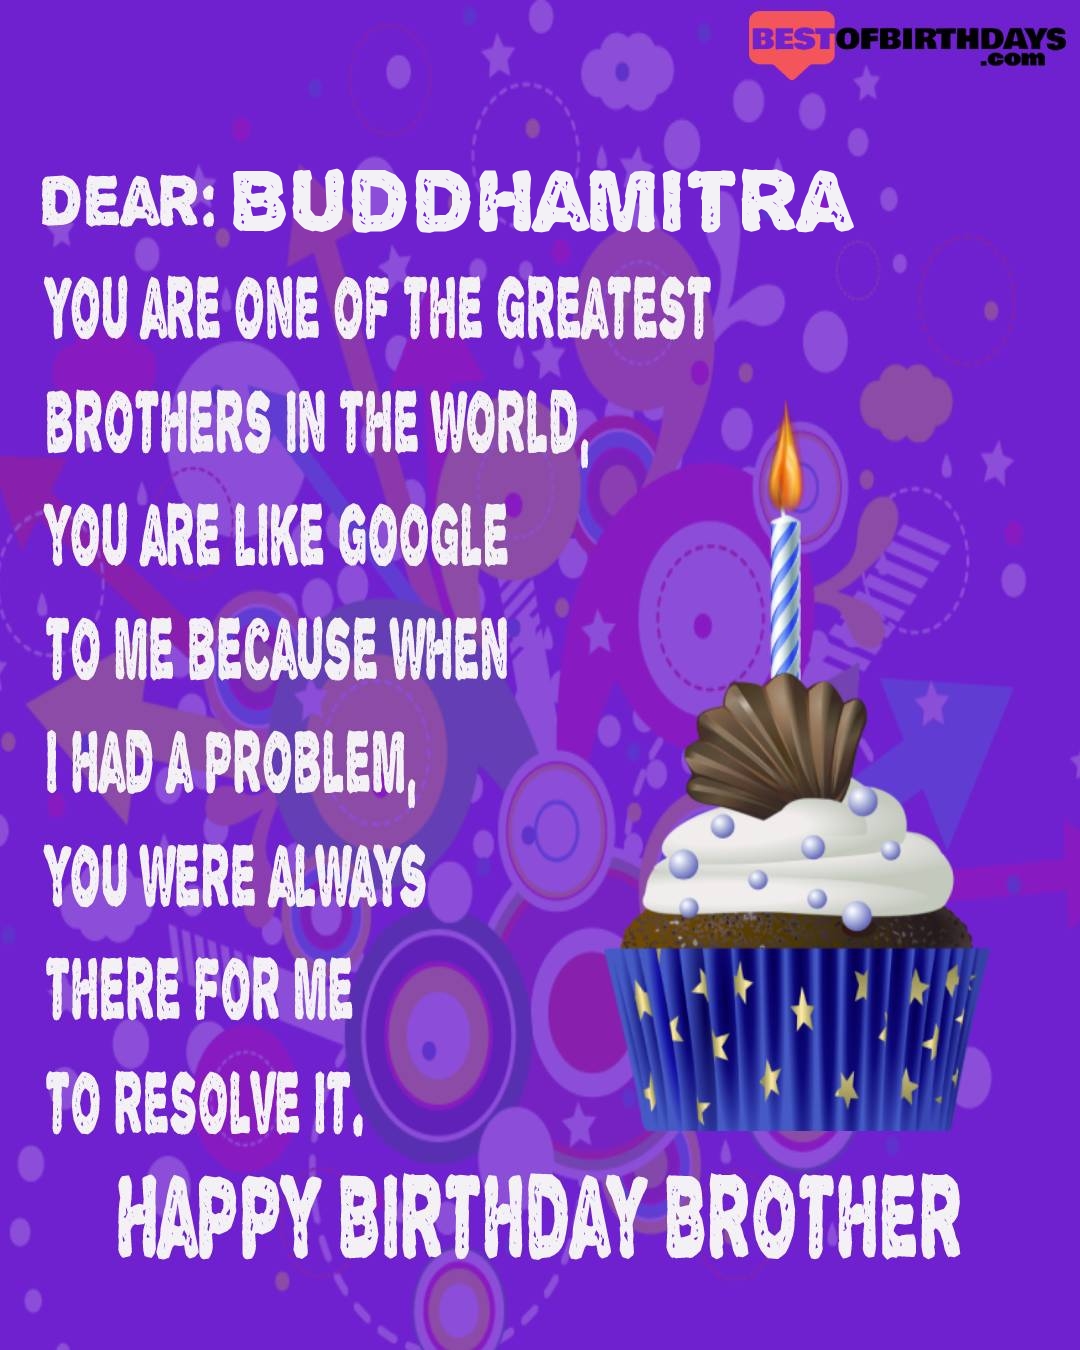 Happy birthday buddhamitra bhai brother bro